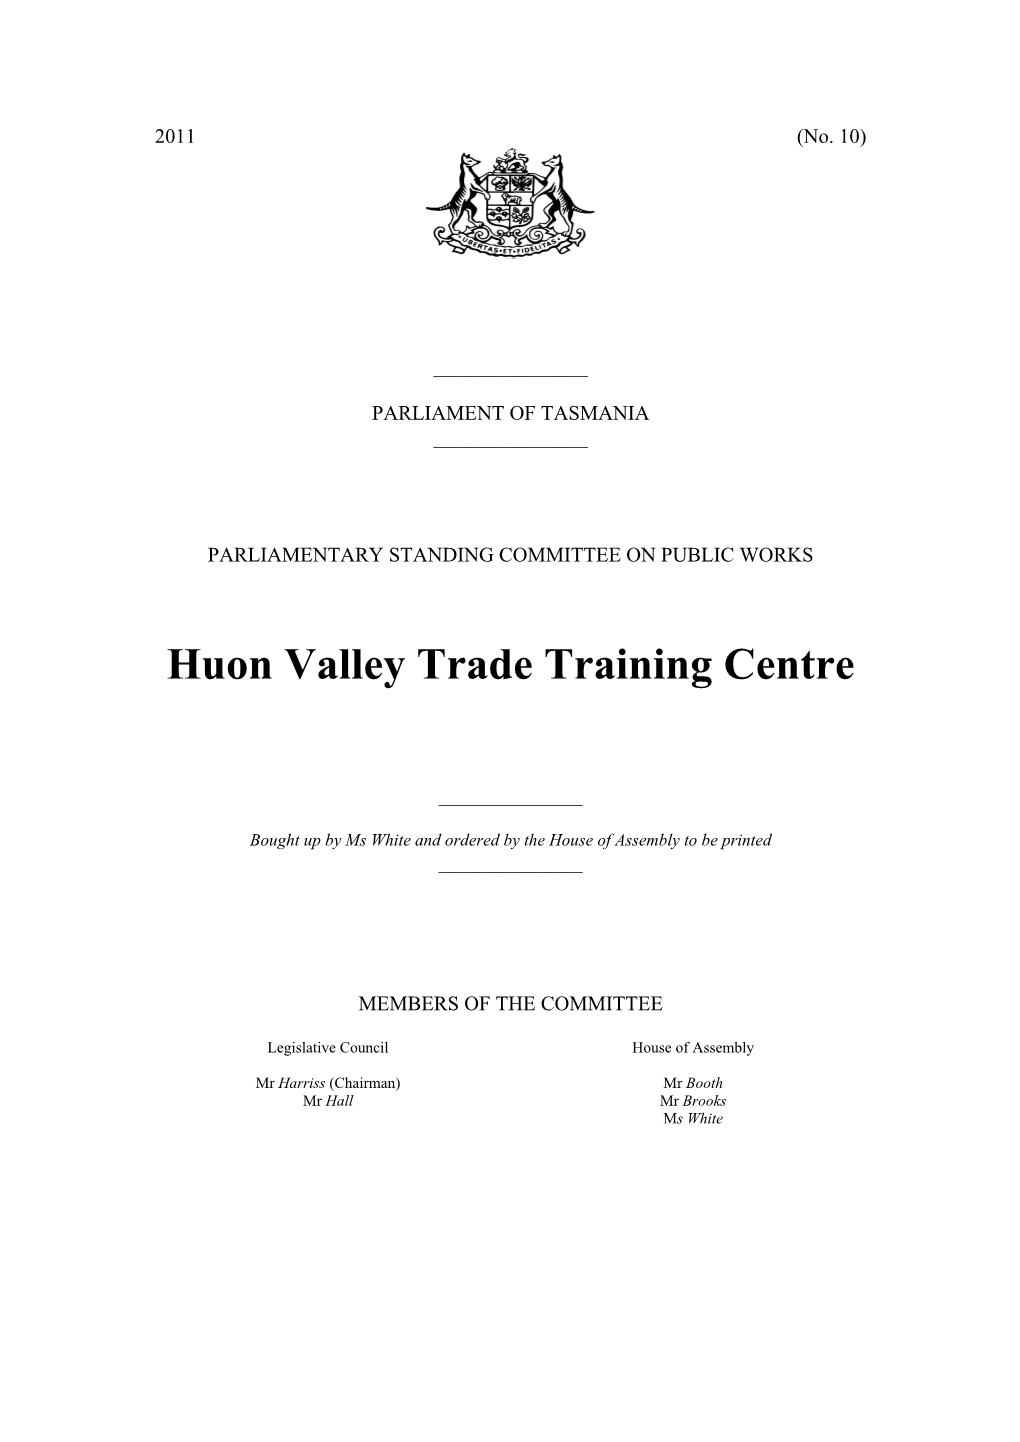 Huon Valley Trade Training Centre